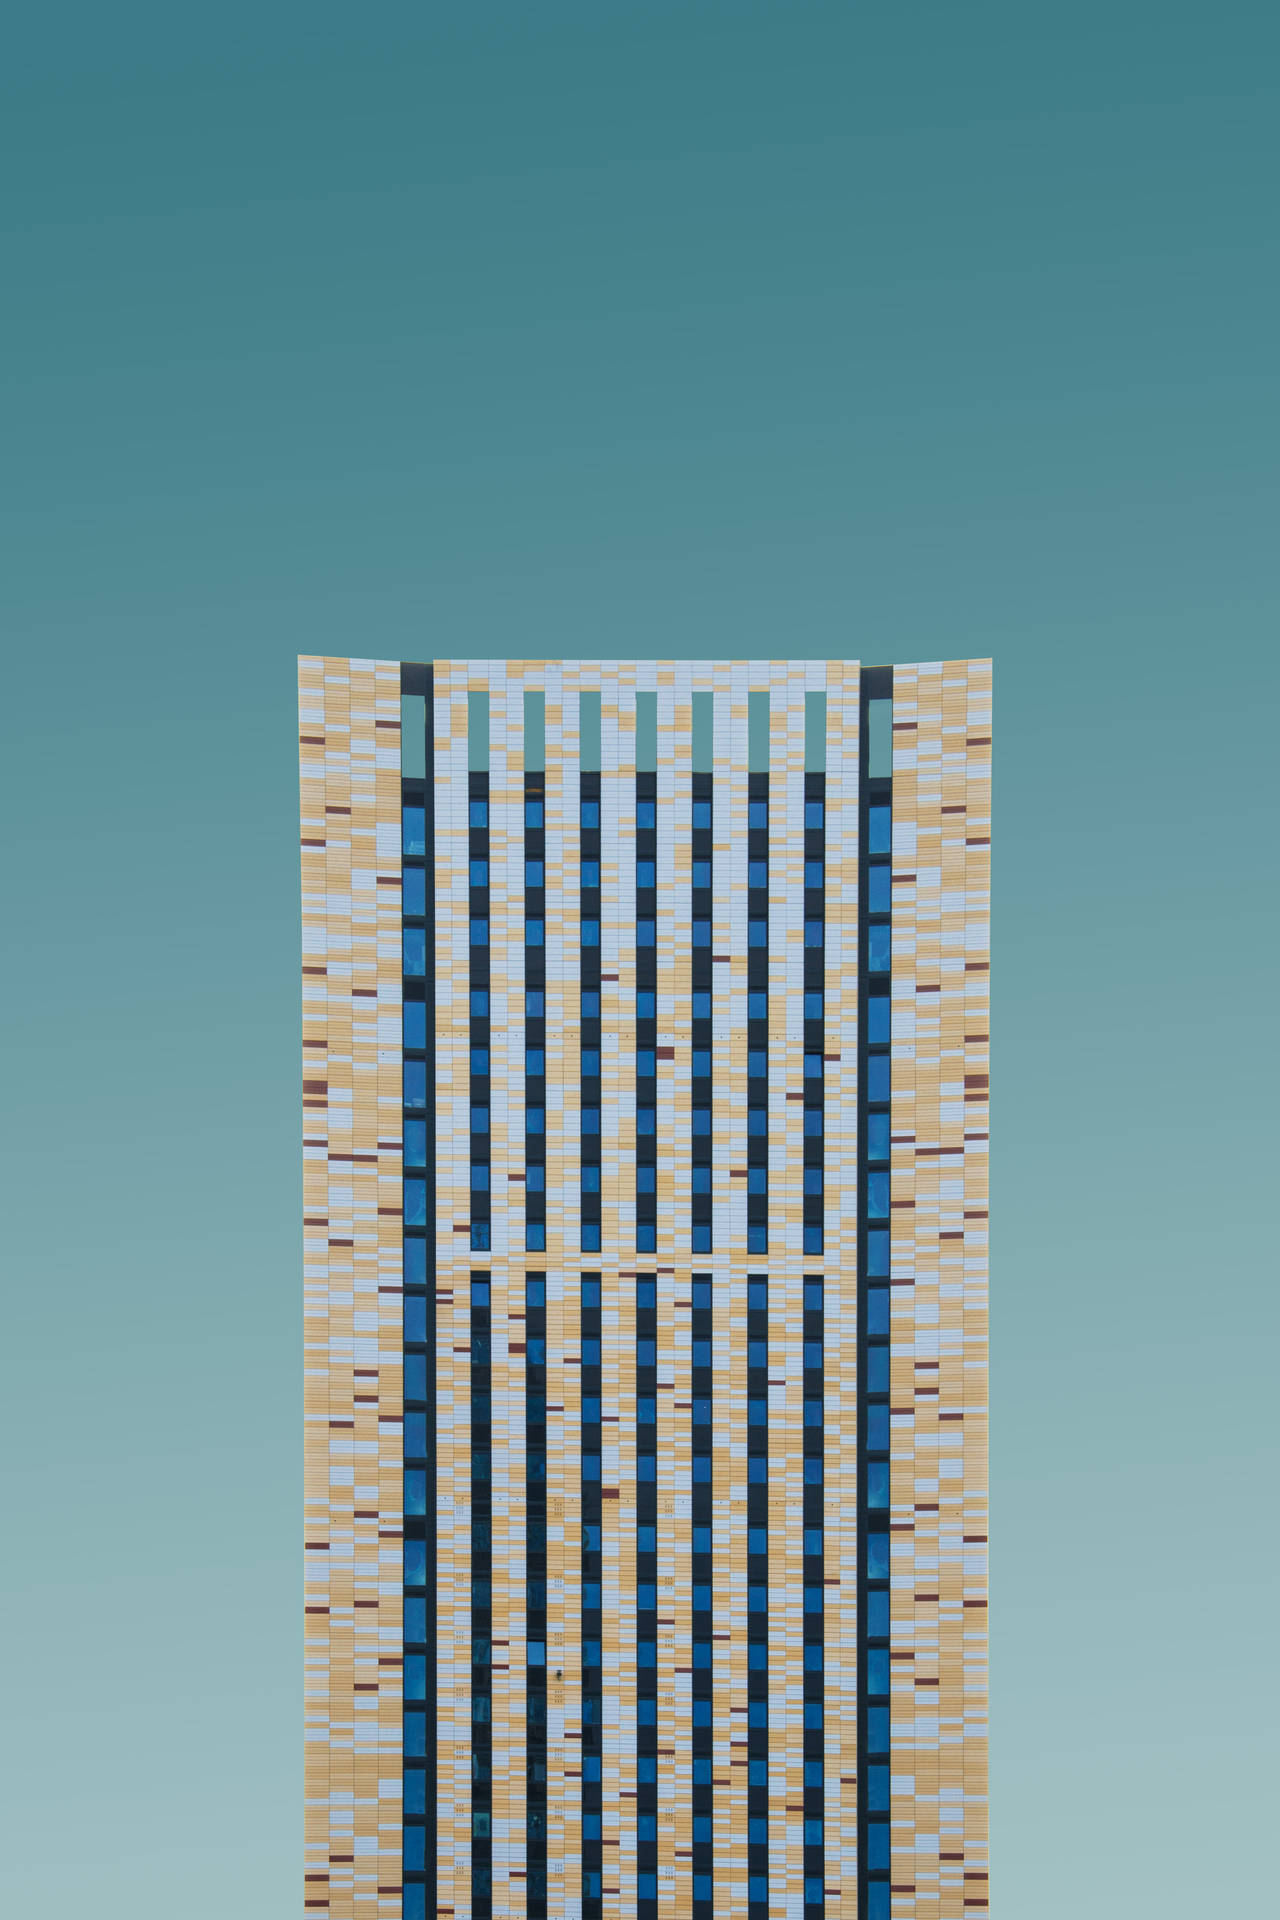 Atlas Tower Grafik Wallpaper